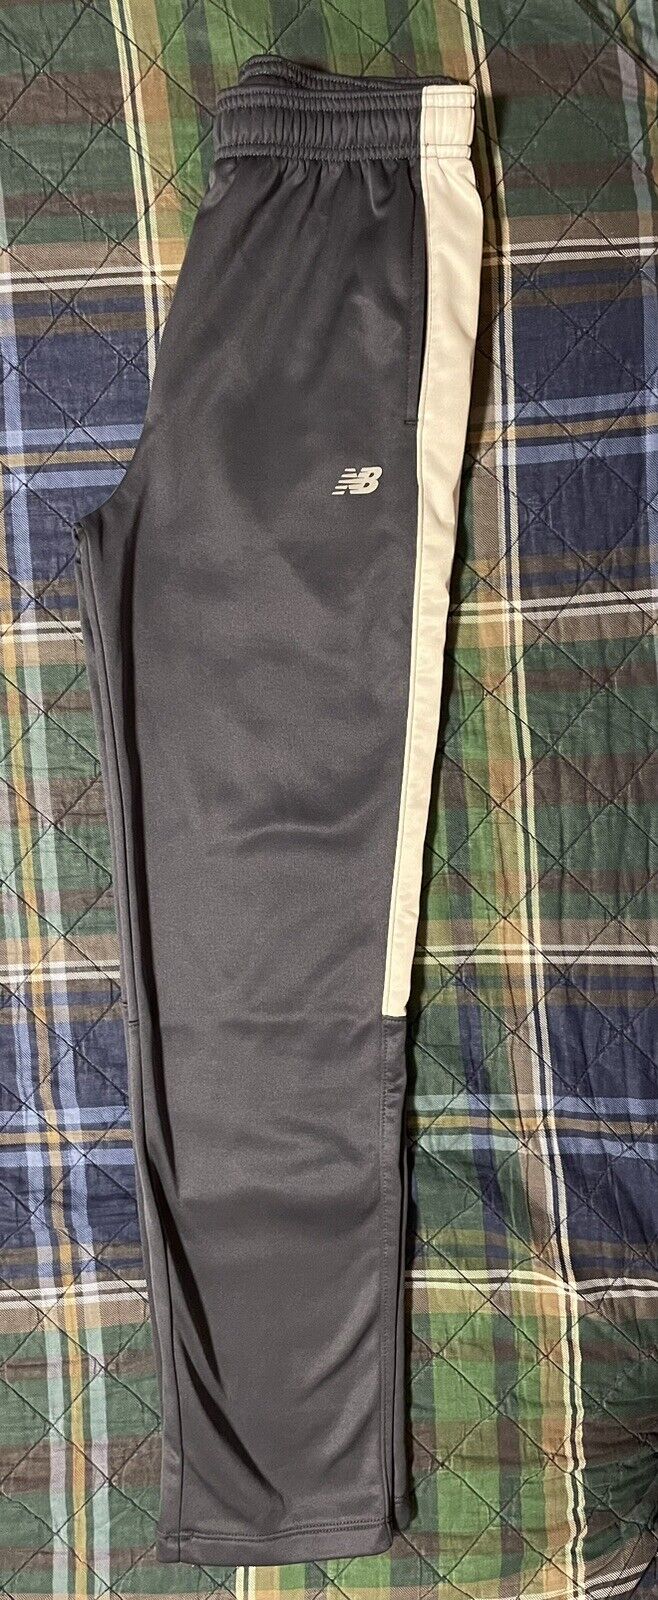 Kids Gray/white/silver New Balance Warm-up Long Pants - Size M 10/12